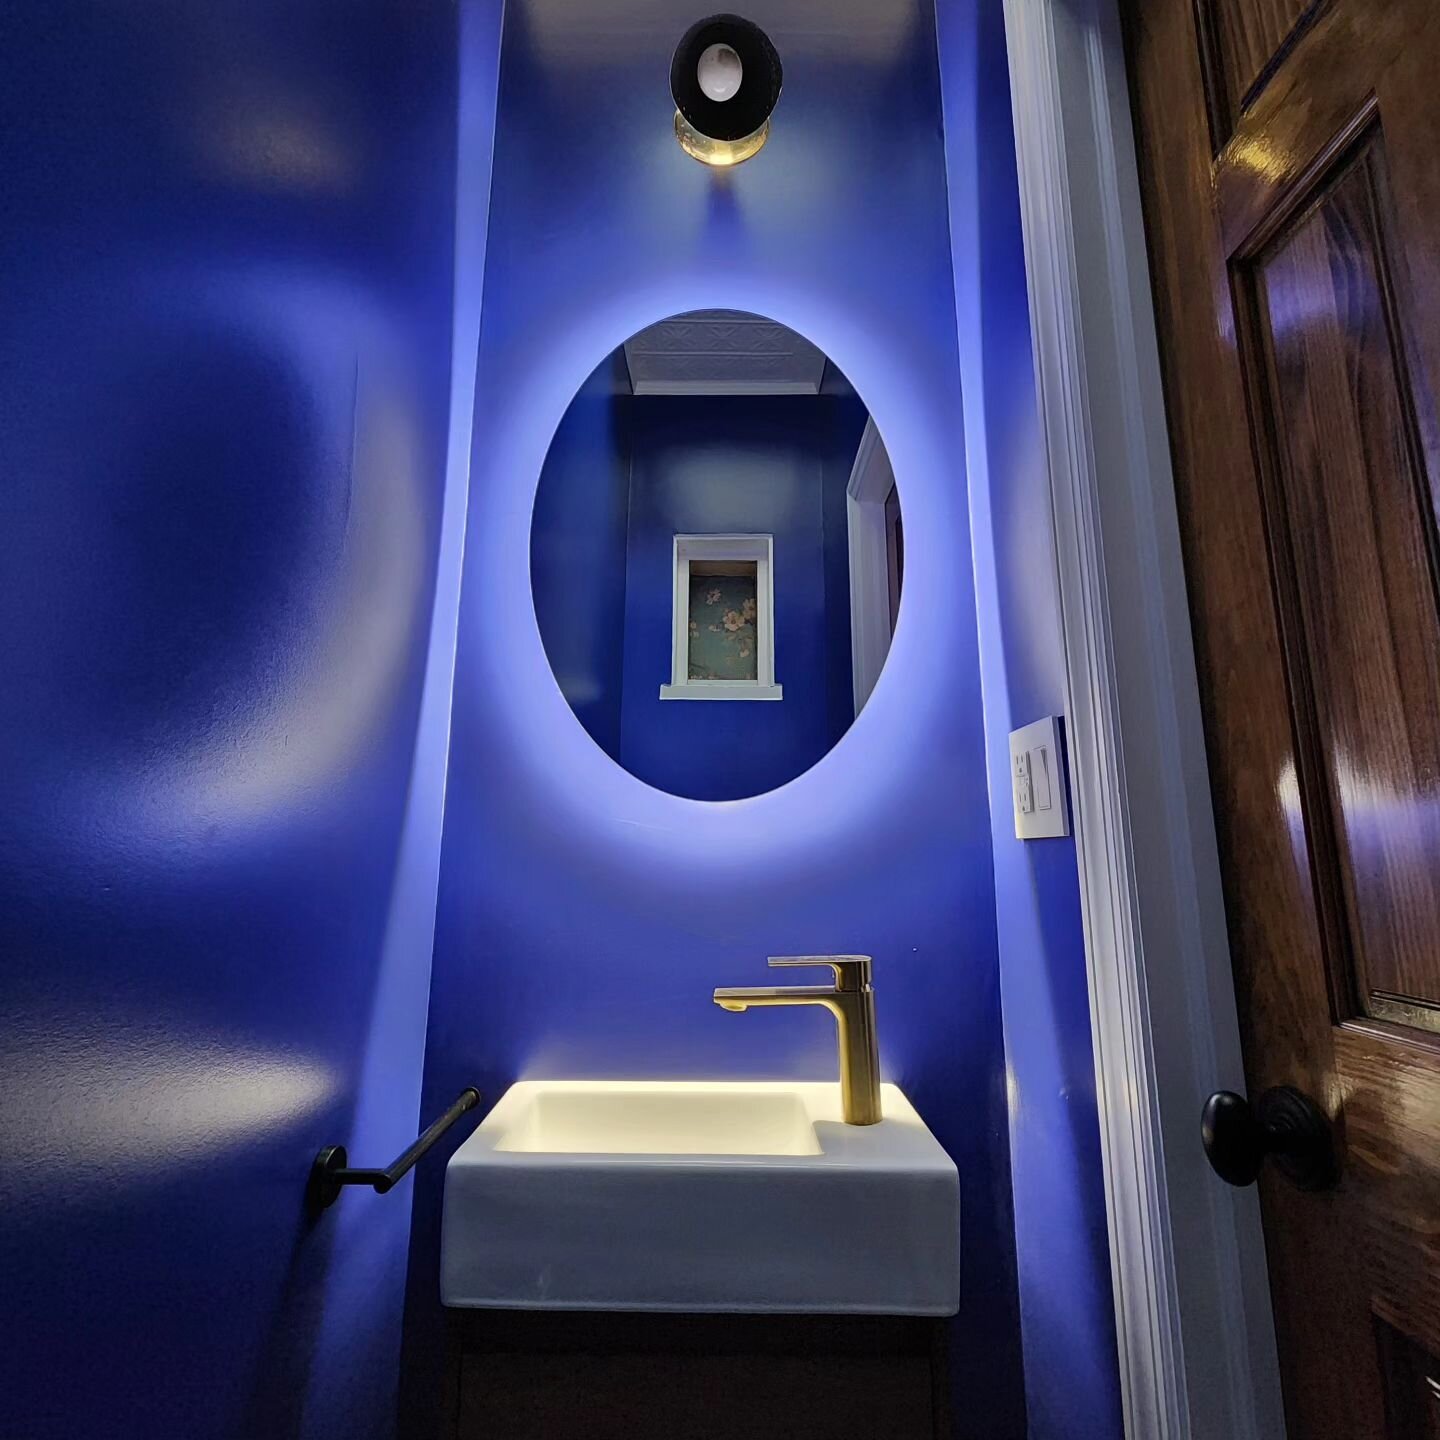 Brand new powder room for our clients in Carroll Gardens!
.
..
...
#bathroominspo #bathroomdesign #interiordesign #homereno #homedesign #paintinspo #bathroomreno #bluebathroom #powderroom #generalcontractor #womeninconstruction #carrollgardens #cobbl